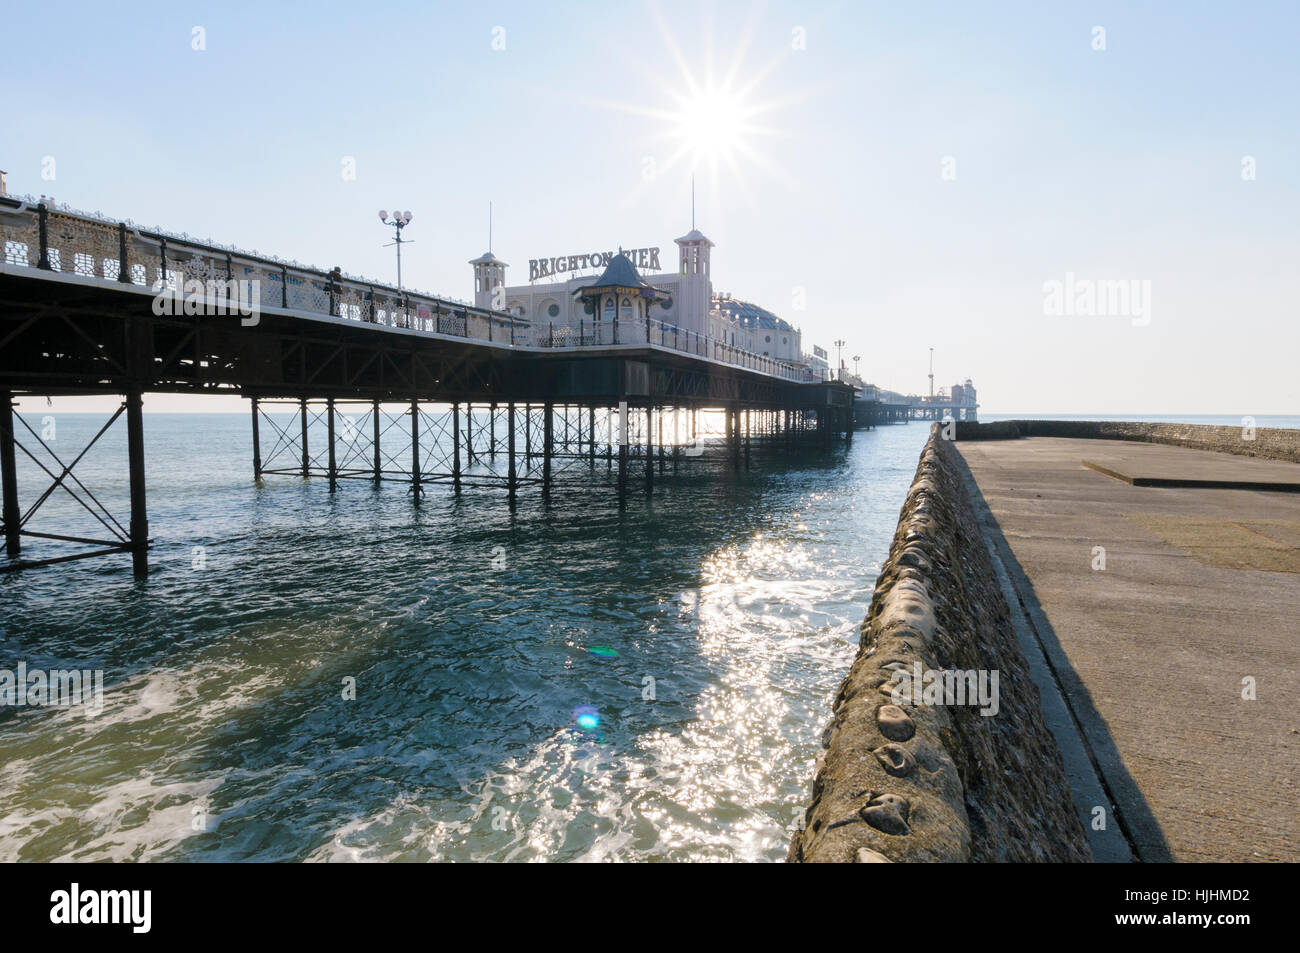 Le Palace Pier de Brighton, Brighton, Sussex, England, UK Banque D'Images